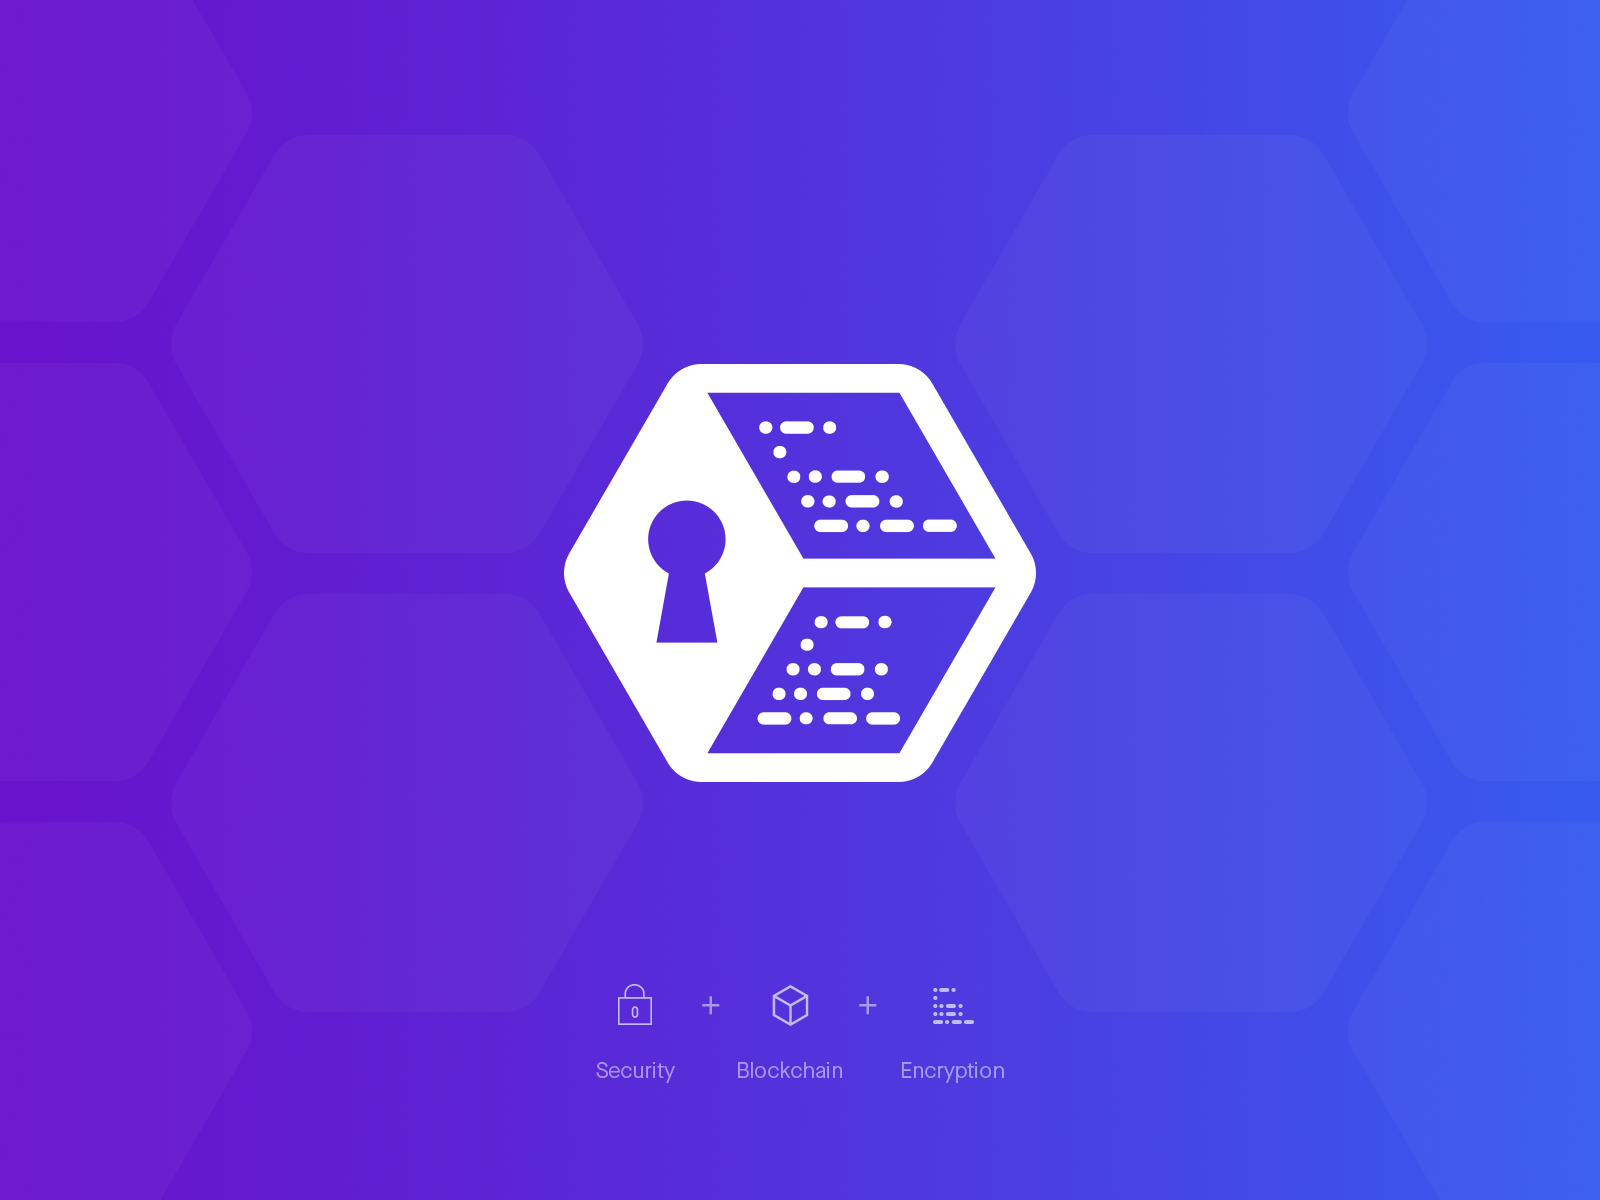 Security + Blockchain + Encryption